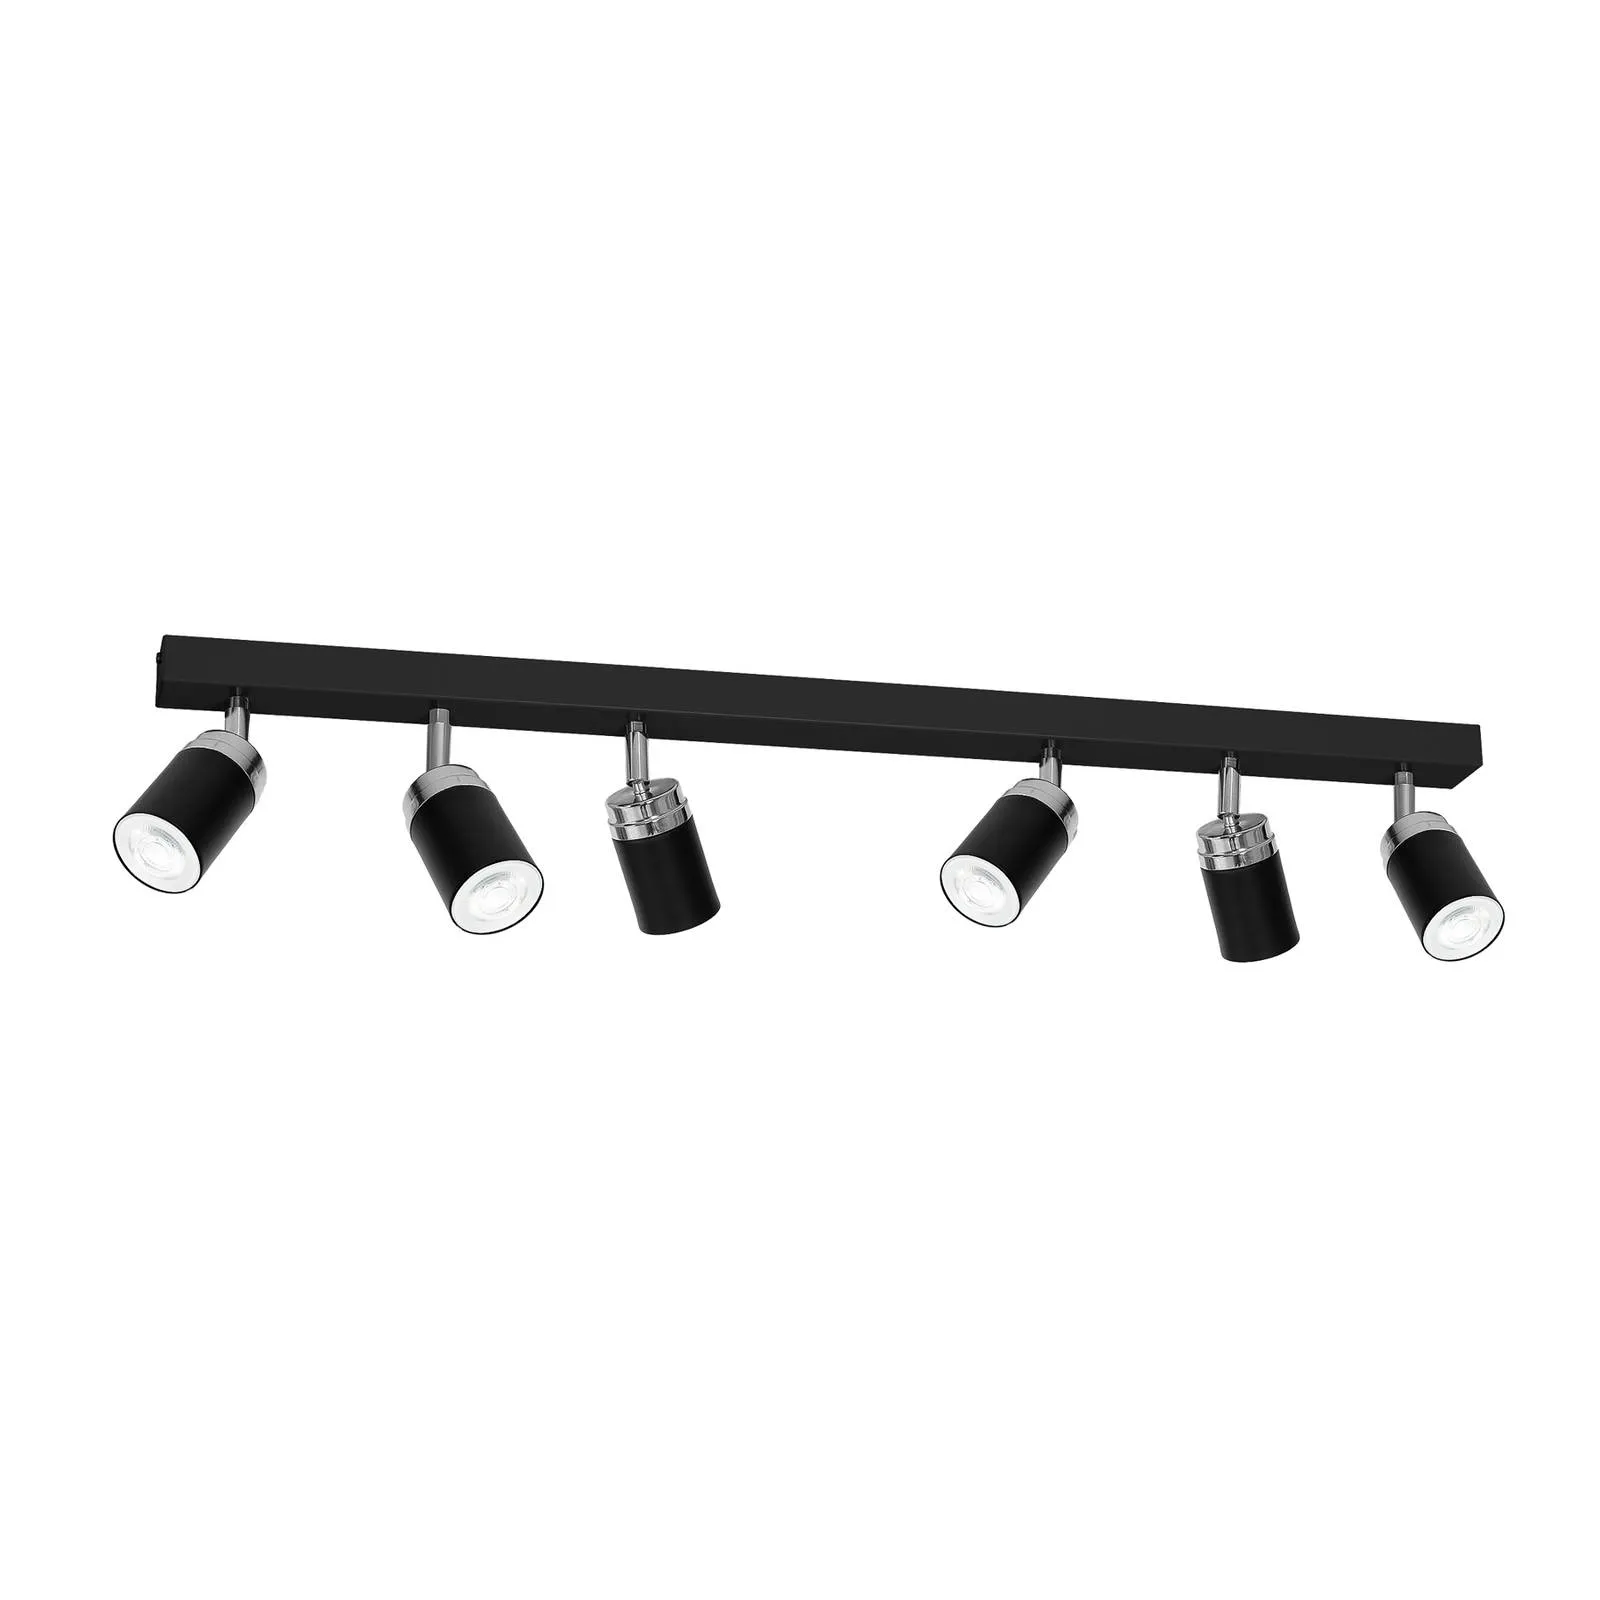 Rondo ceiling spotlight black/chrome six-bulb